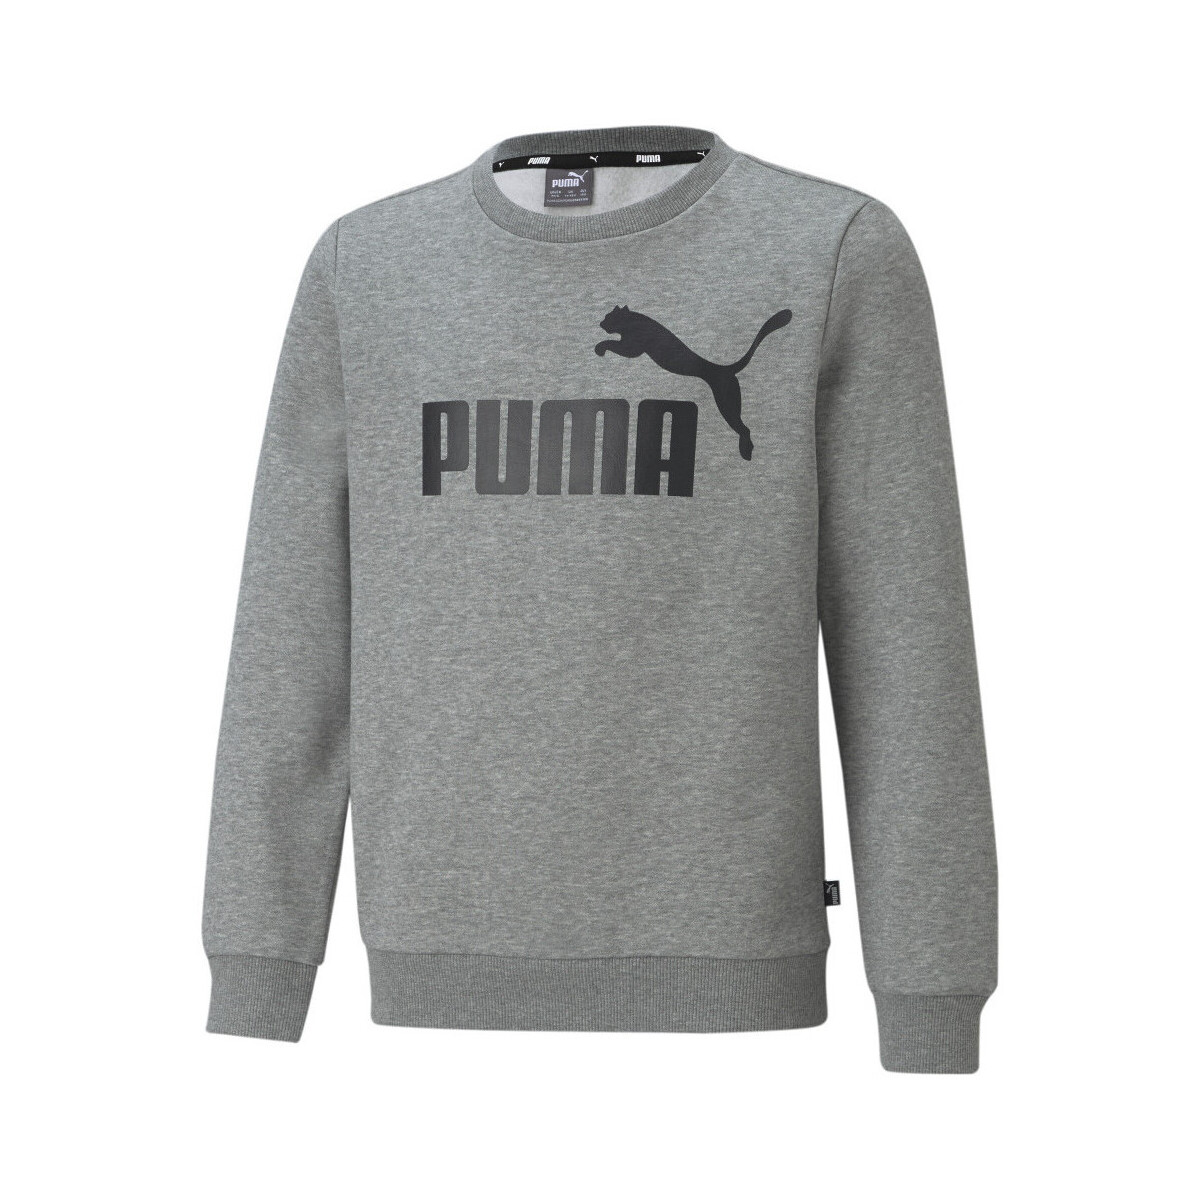 Textiel Jongens Sweaters / Sweatshirts Puma  Grijs